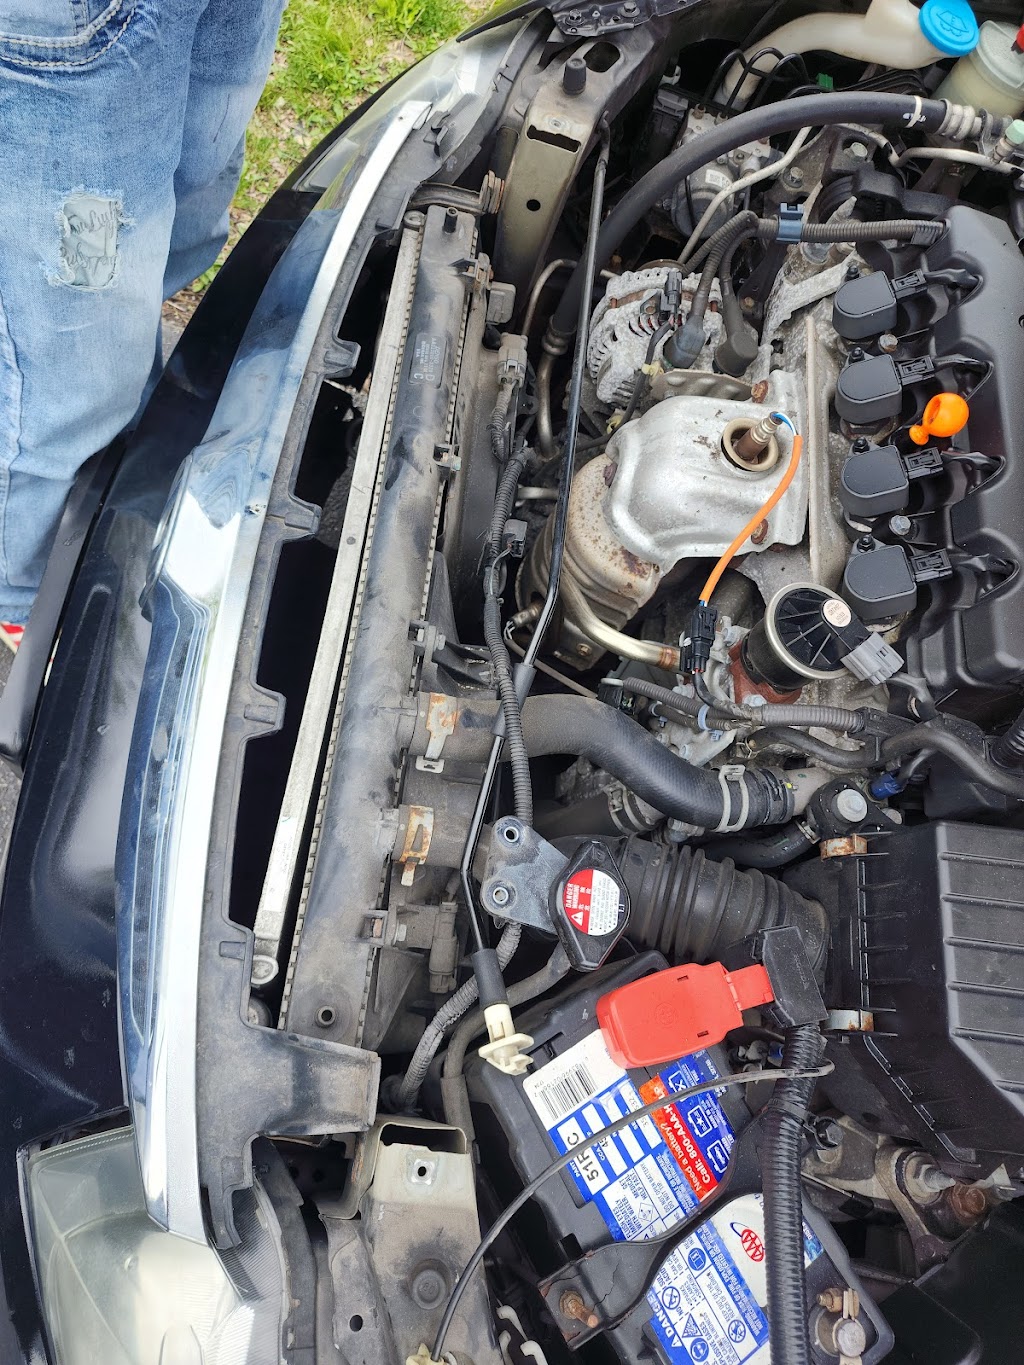 Ernies Auto Repair | 3210 Market St # A, Upper Chichester, PA 19014 | Phone: (610) 485-8454